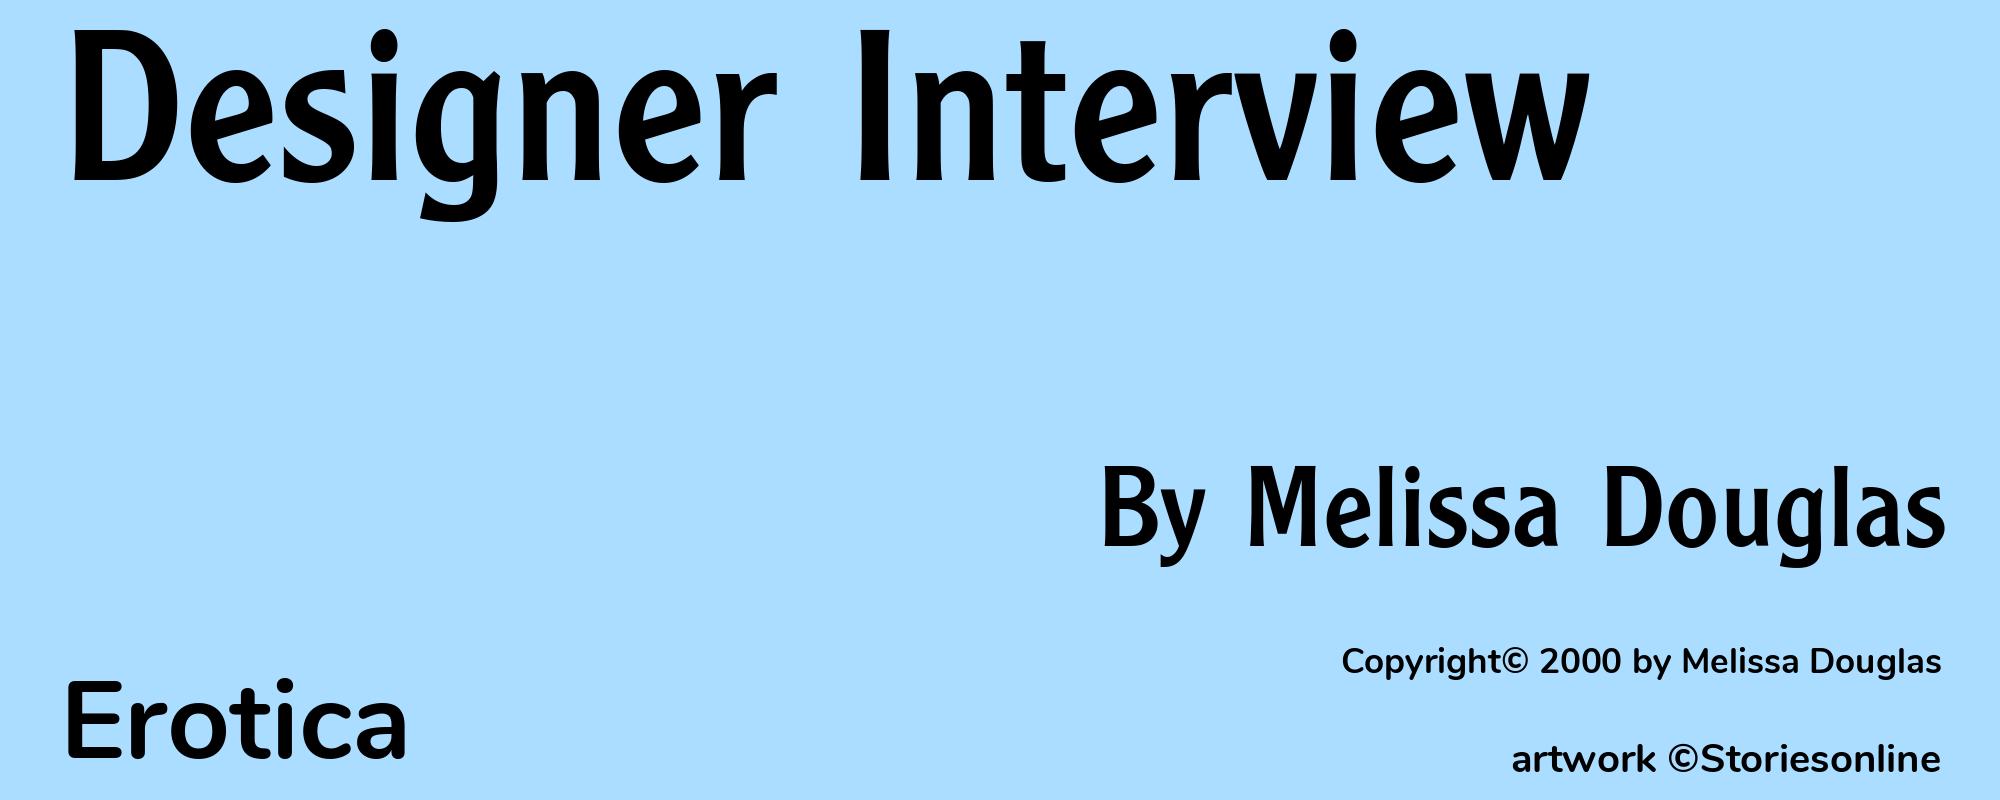 Designer Interview - Cover